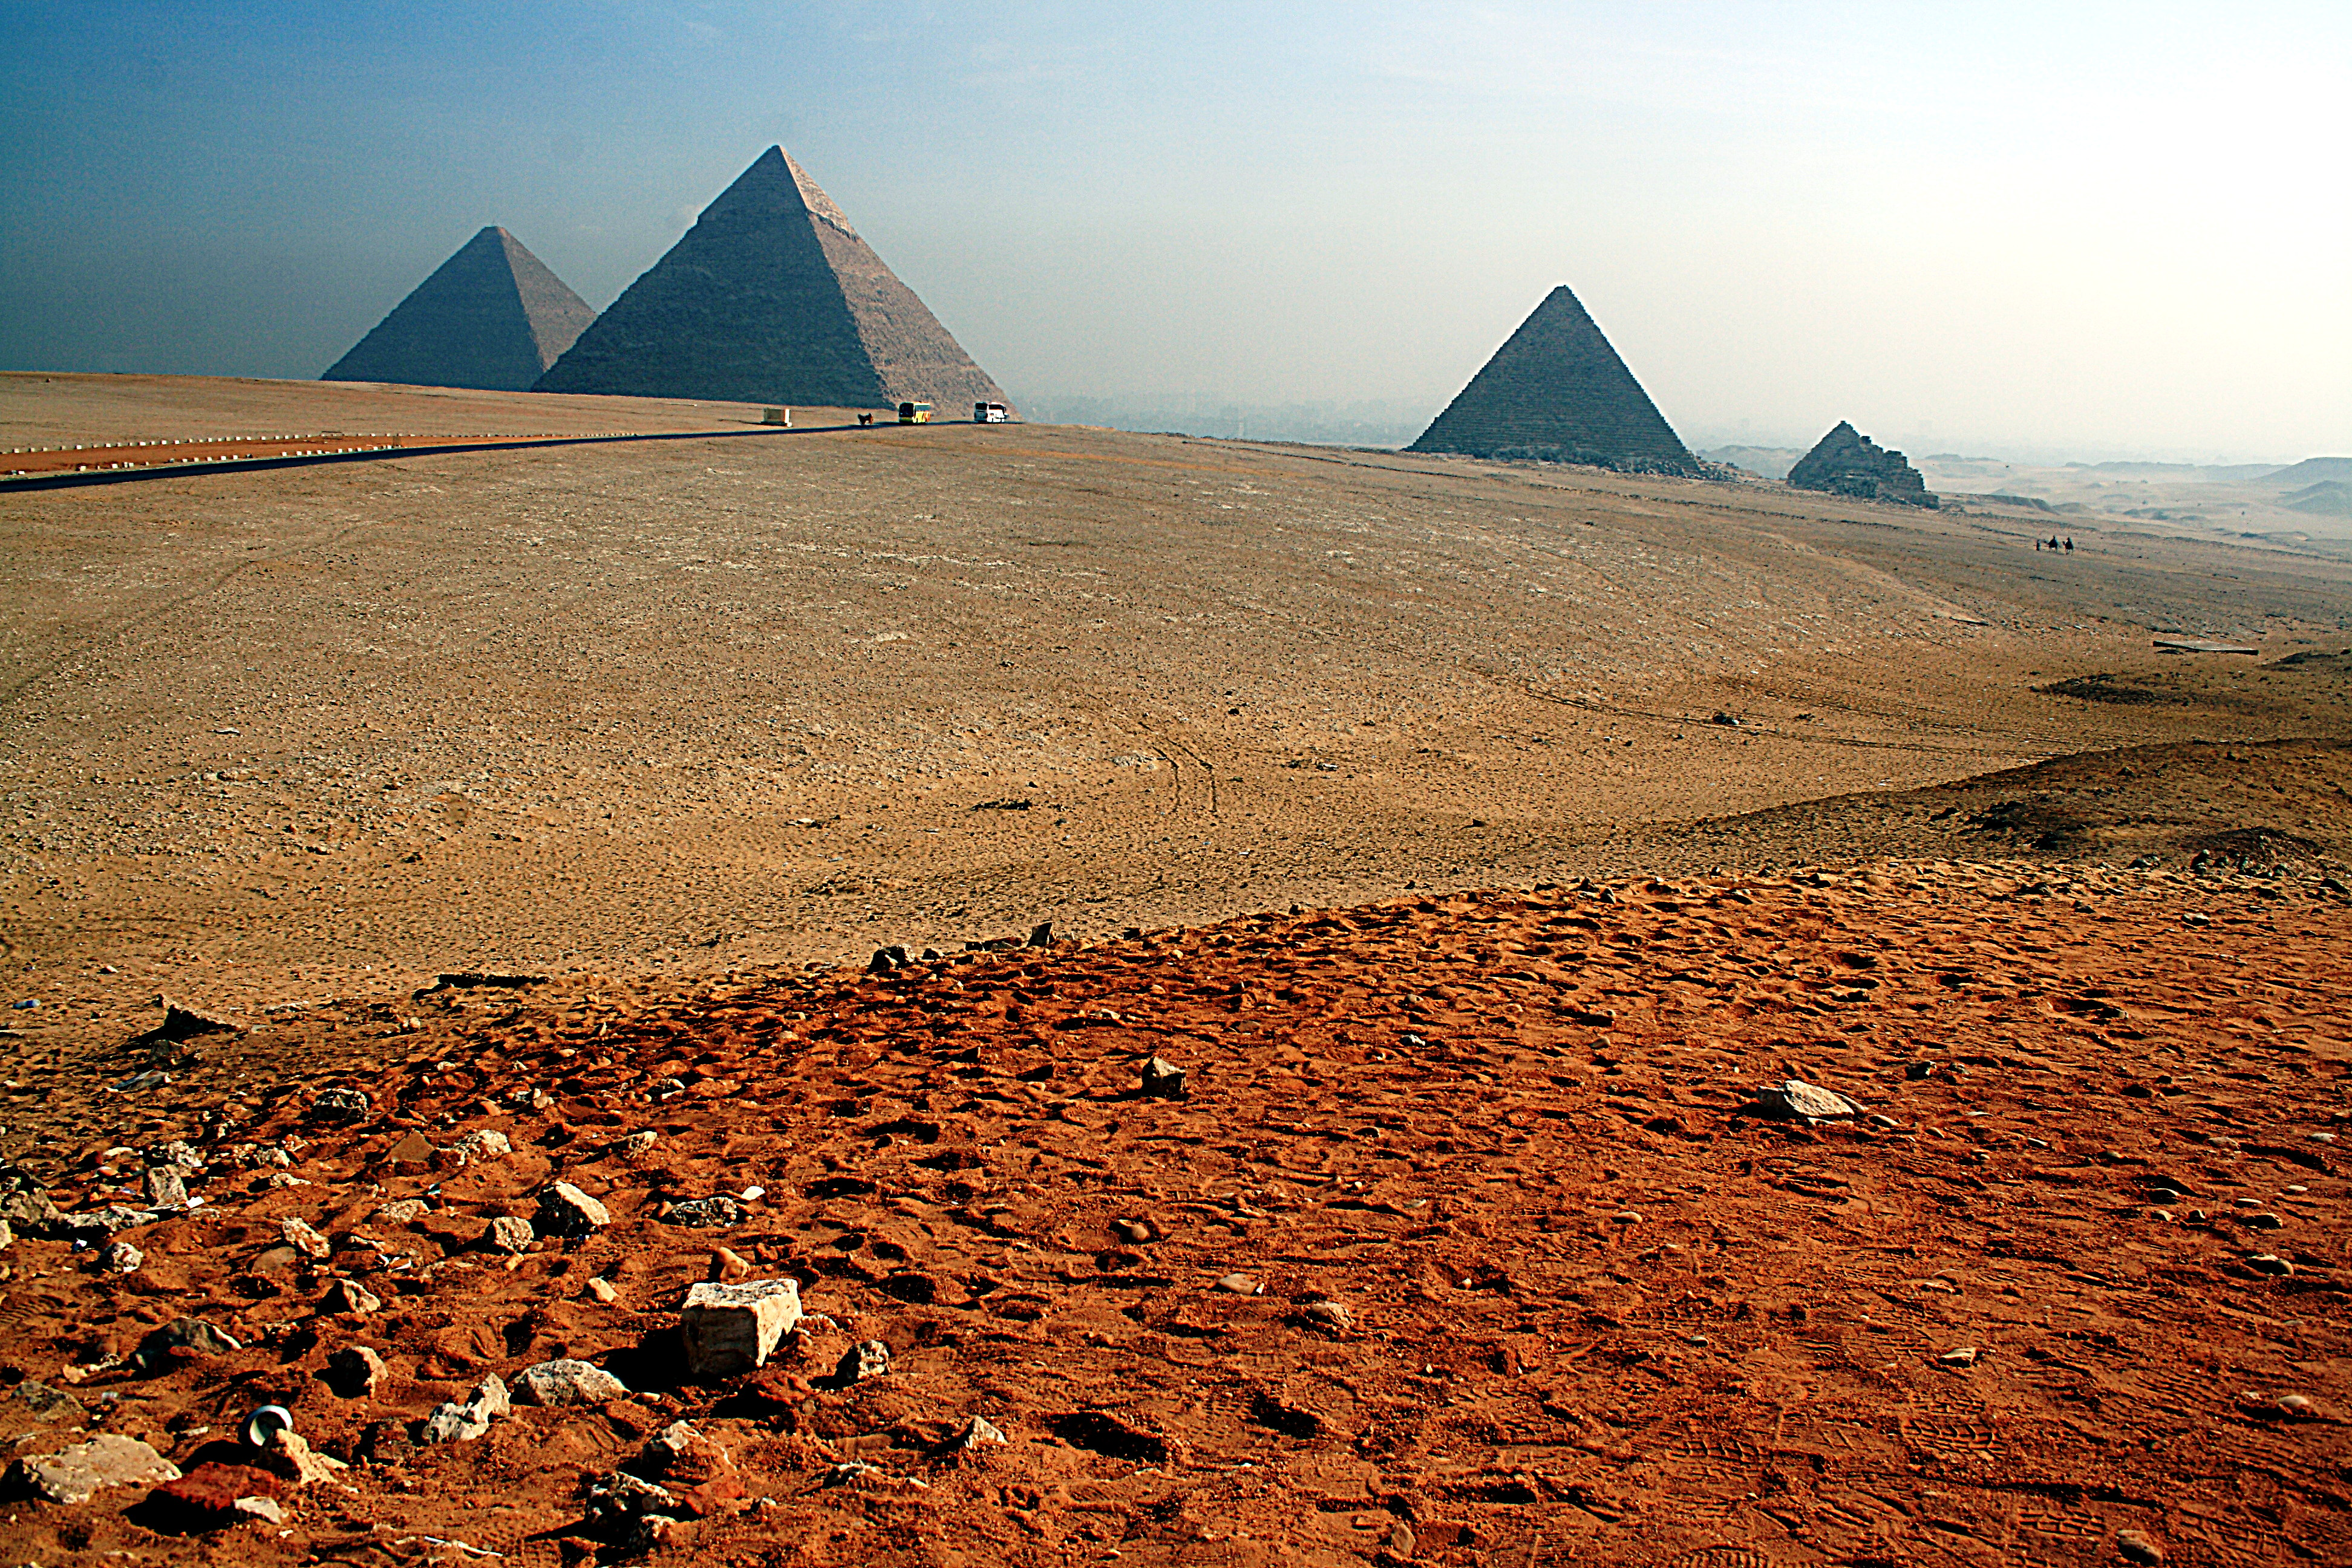 File:Pyramiden von Gizeh 0885.JPG - Wikimedia Commons